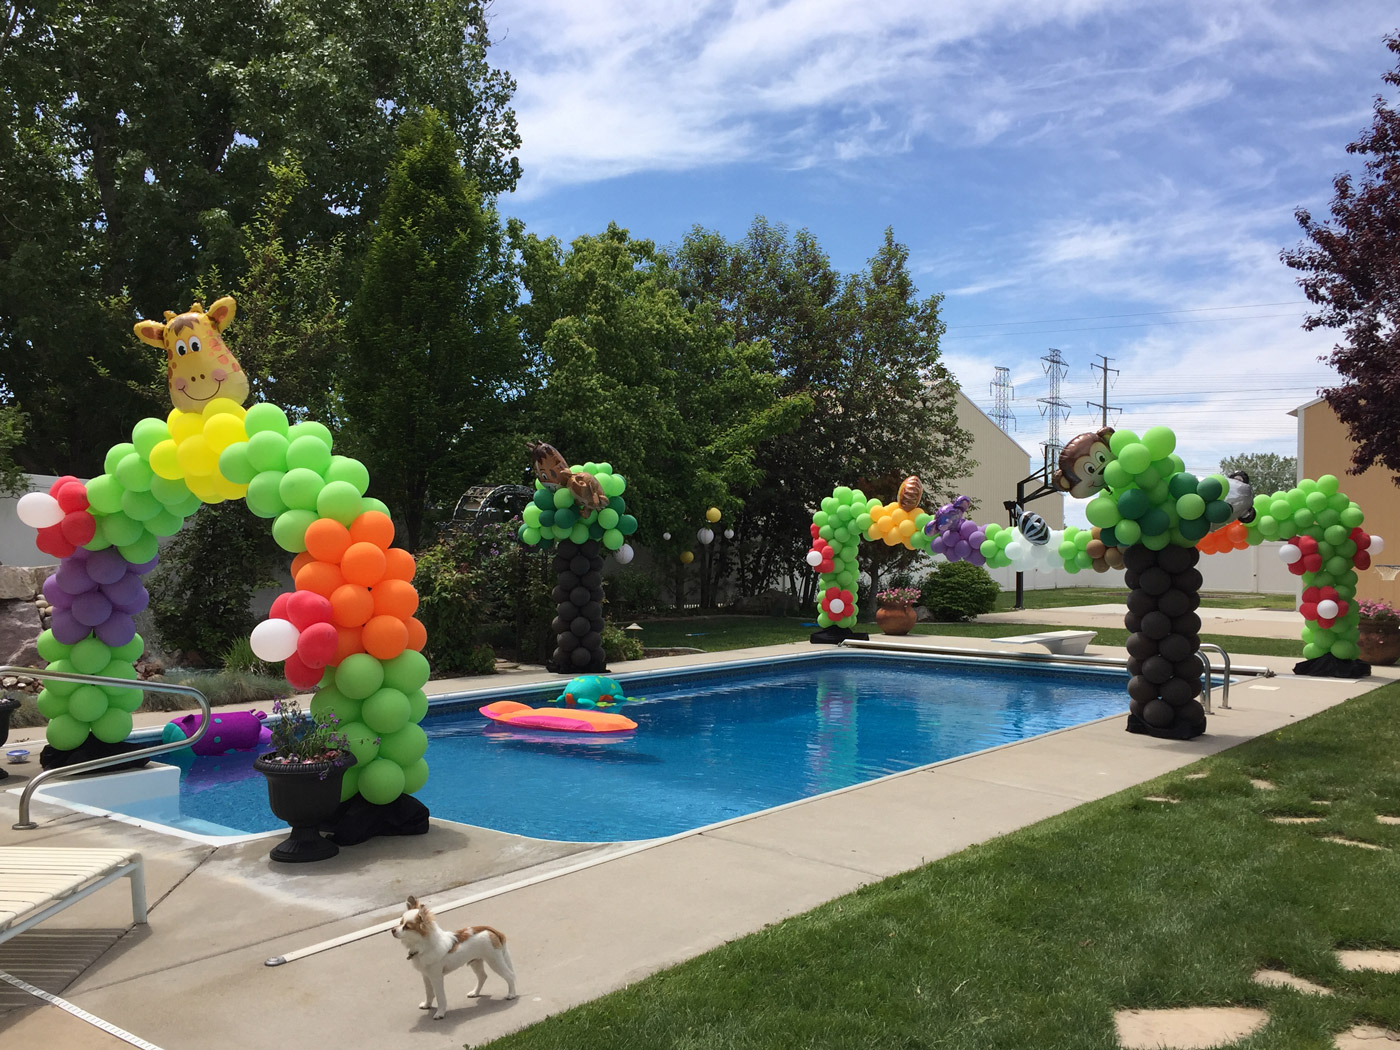 Balloon decorations around a swimming pool made by the Utah Balloon Guru